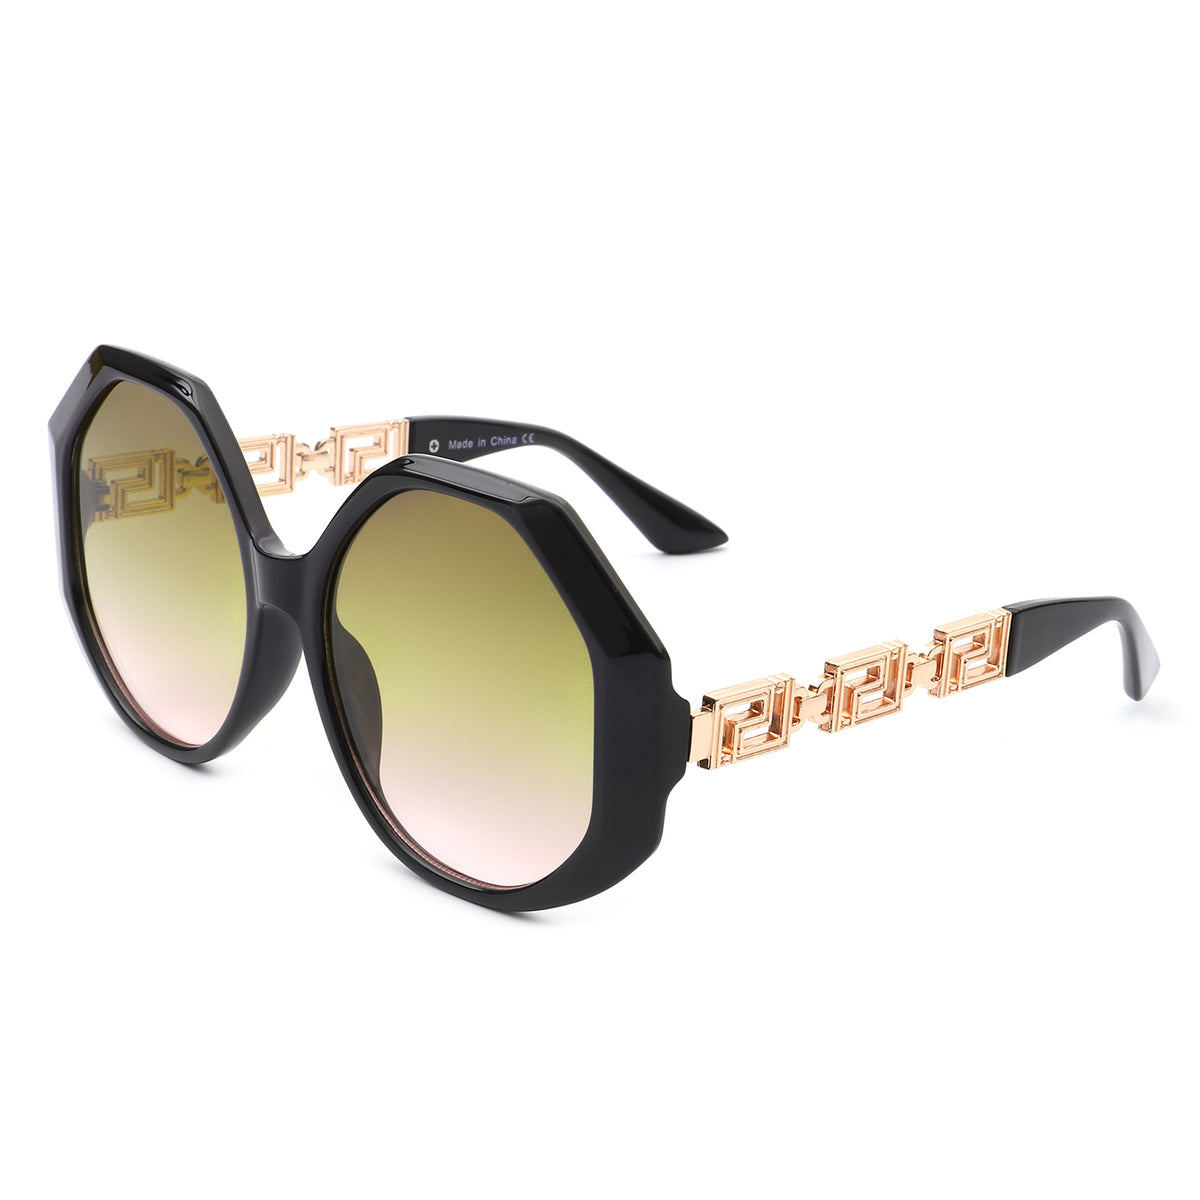 Geometric Oversize Round Sunglasses